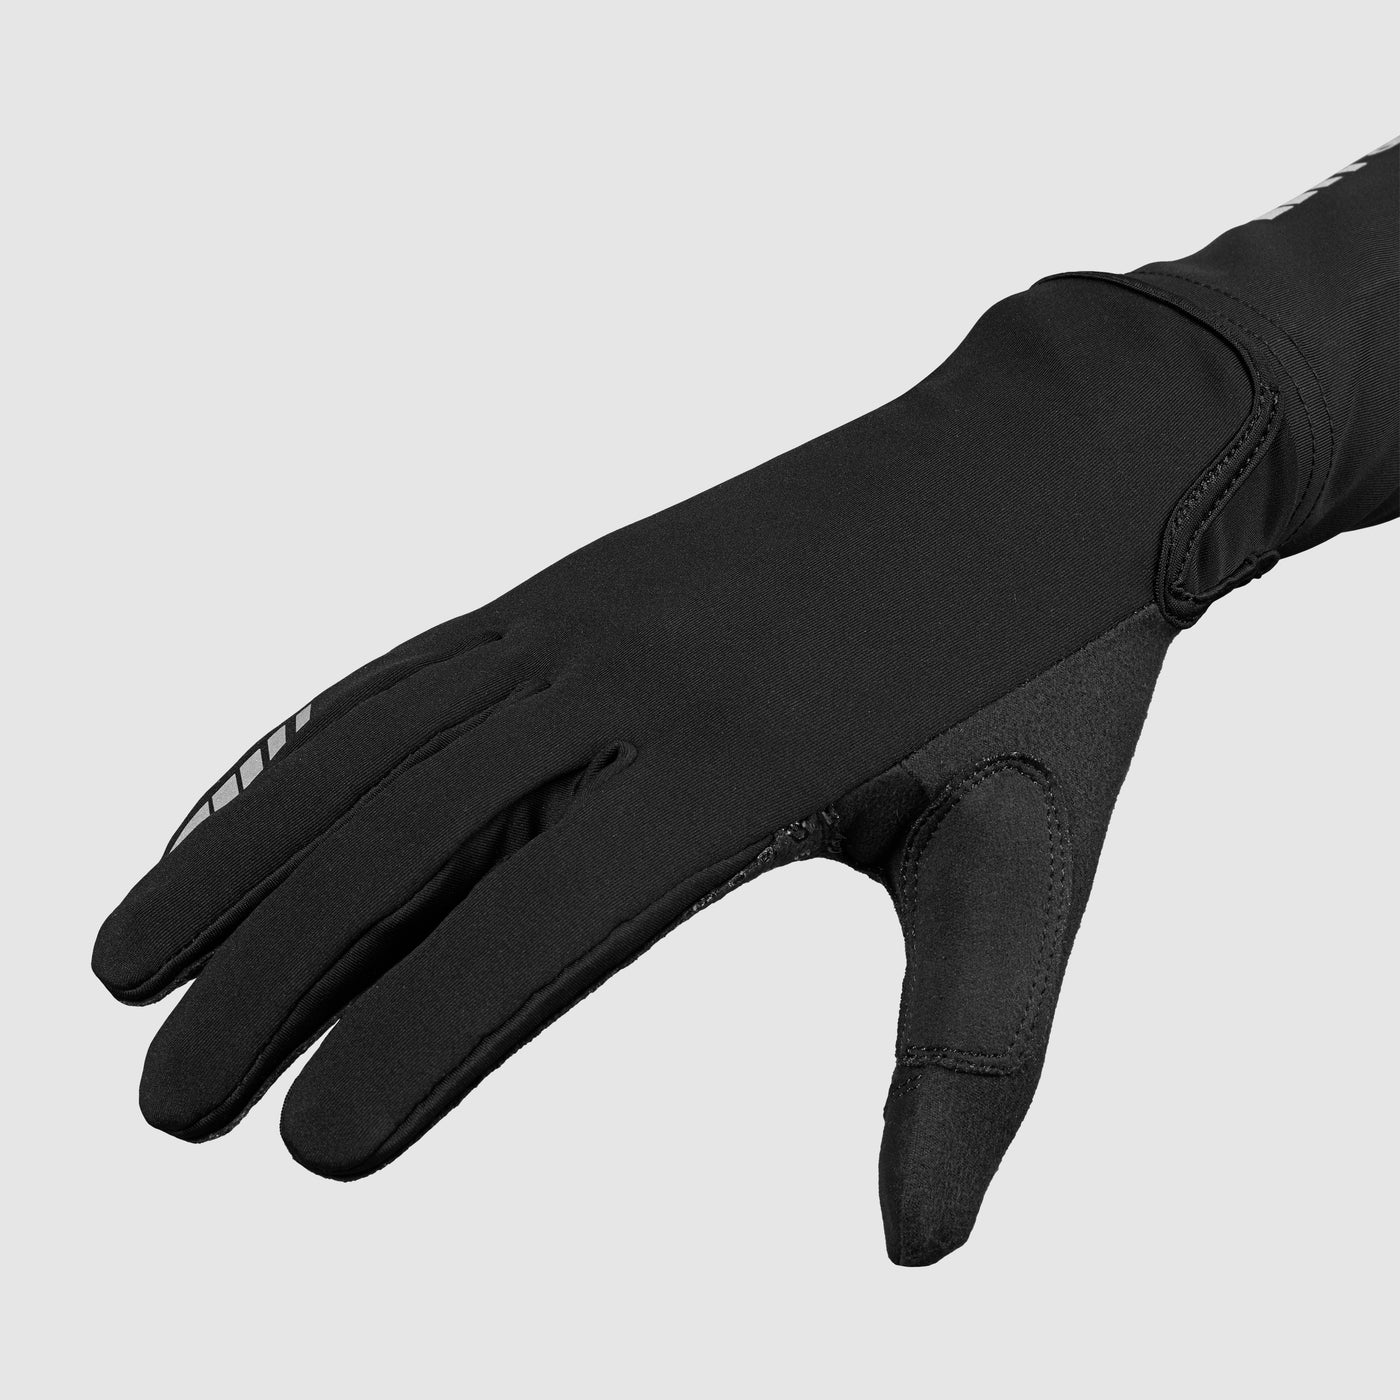 Raptor RaceDay Windproof Spring-Autumn Gloves